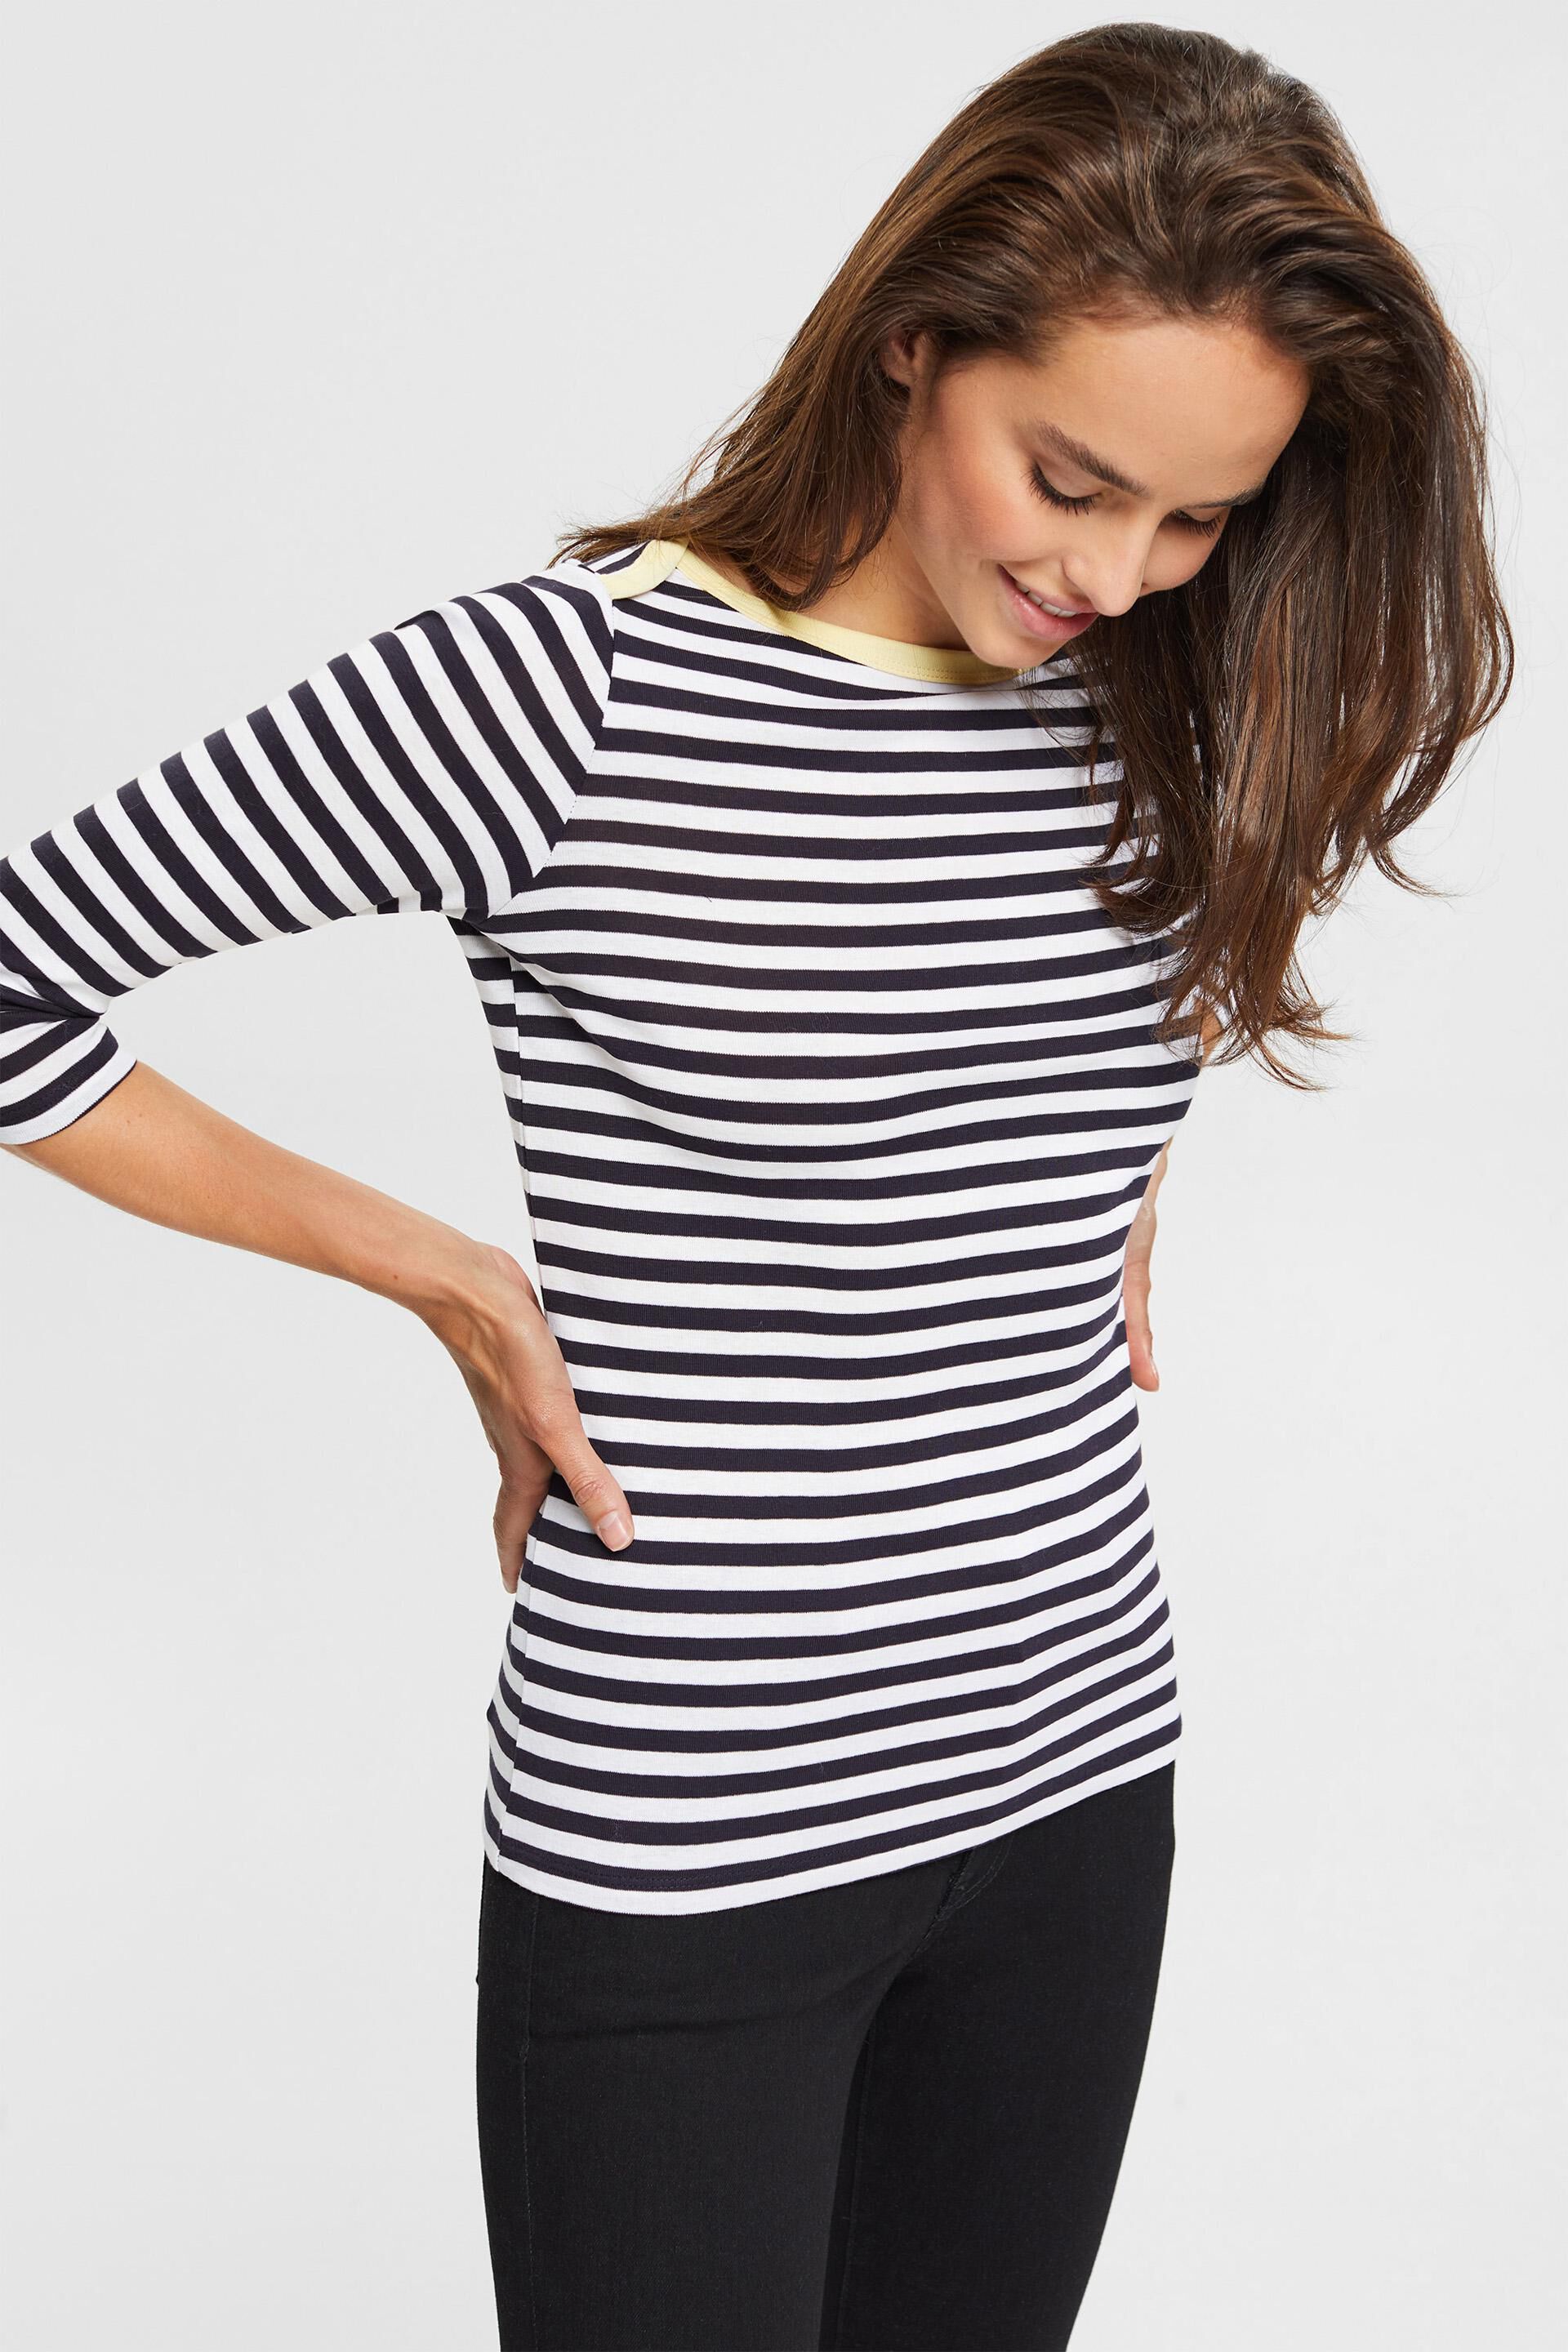 Fashion Shirts Boatneck Shirts More & More Boatneck Shirt striped pattern casual look 